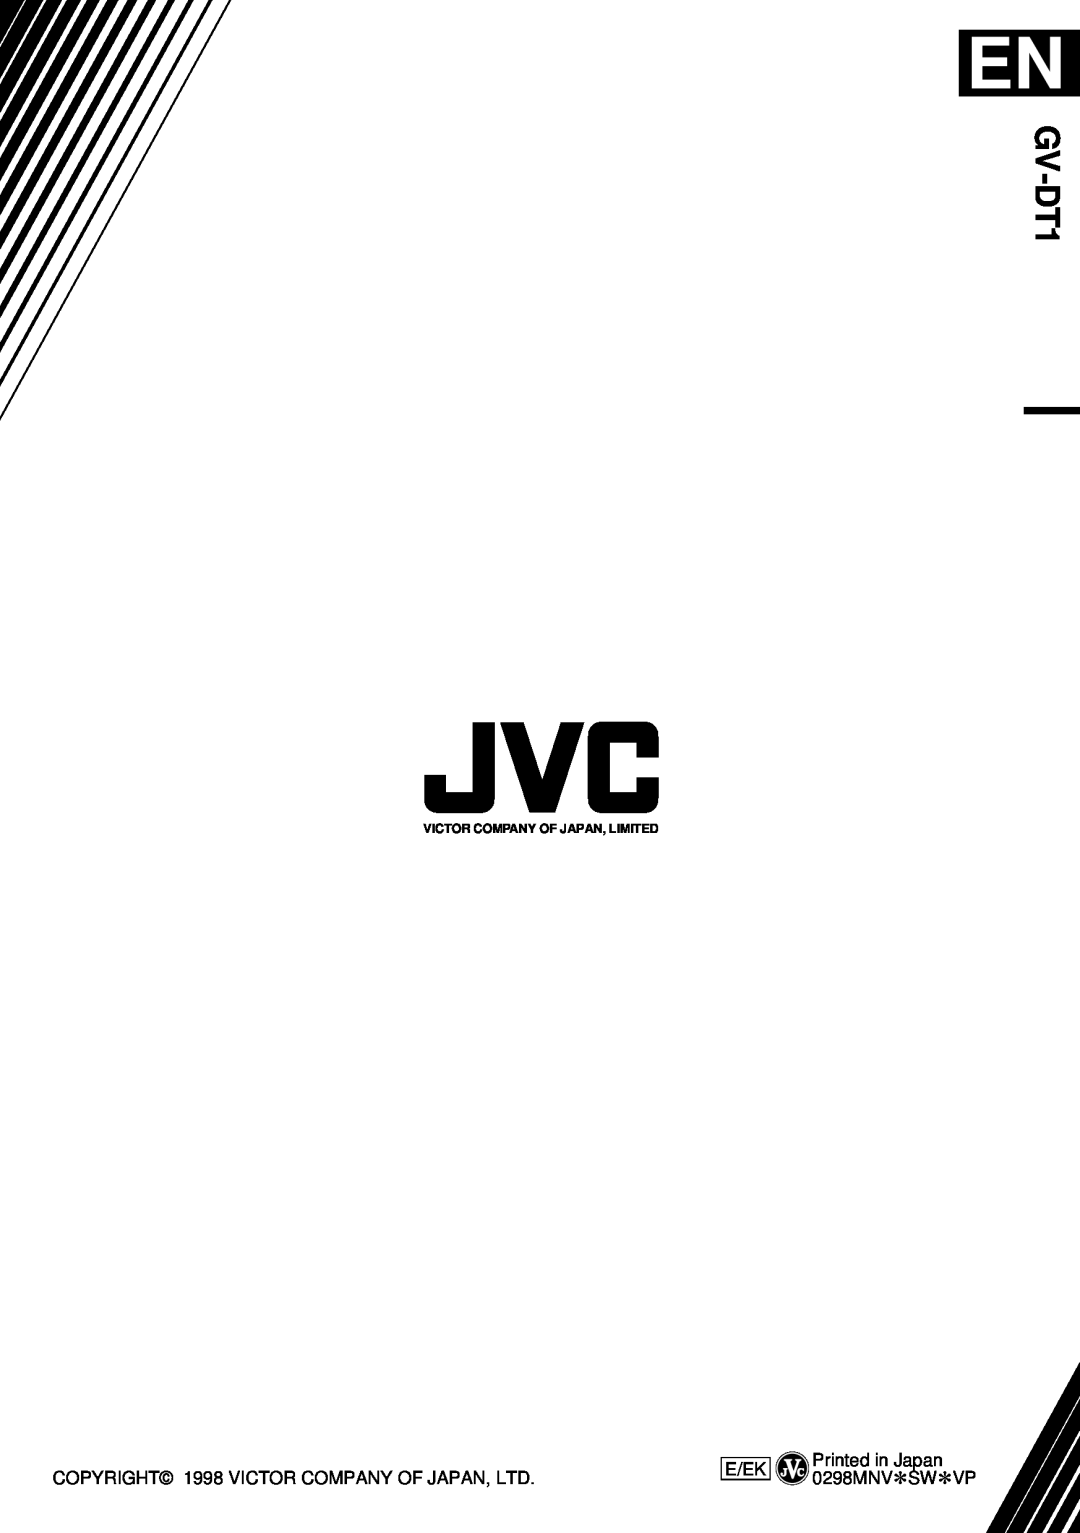 JVC LYT0119-001A manual GV-DT1, E/Ek, Printed in Japan 0298MNV*SW*VP, Victor Company Of Japan, Limited 